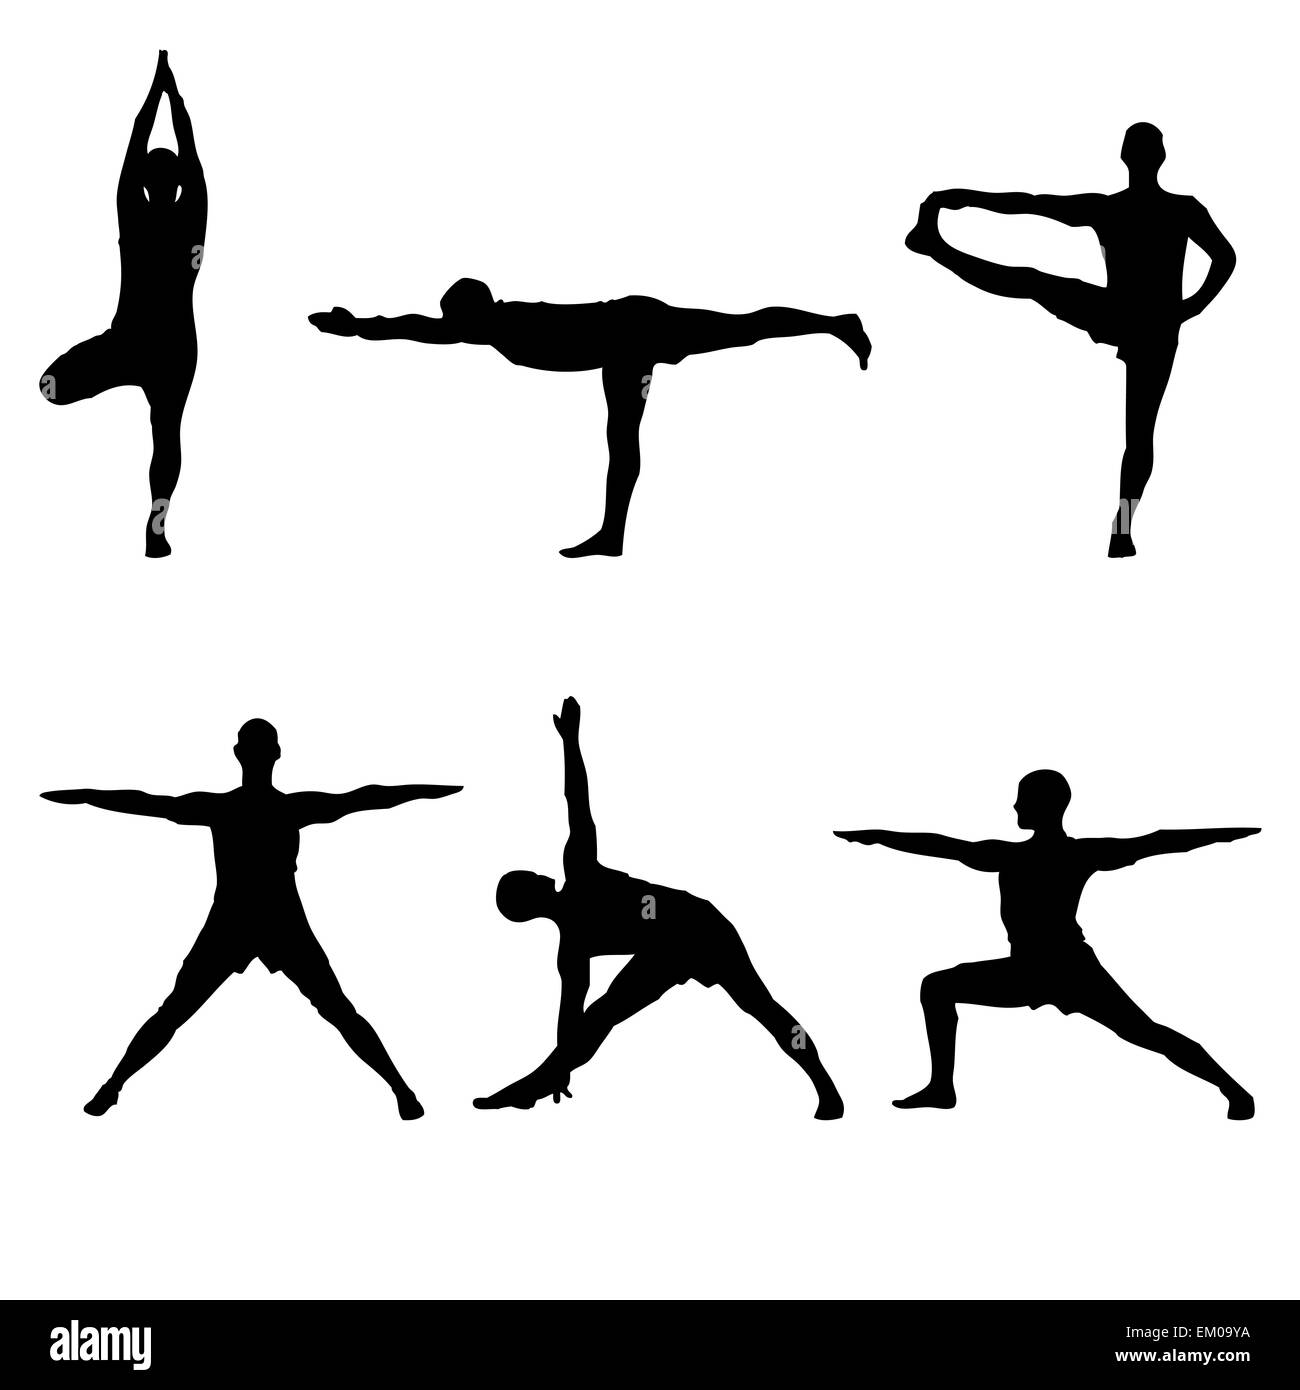 Sarvangasana Yoga Sequence for Shoulderstand